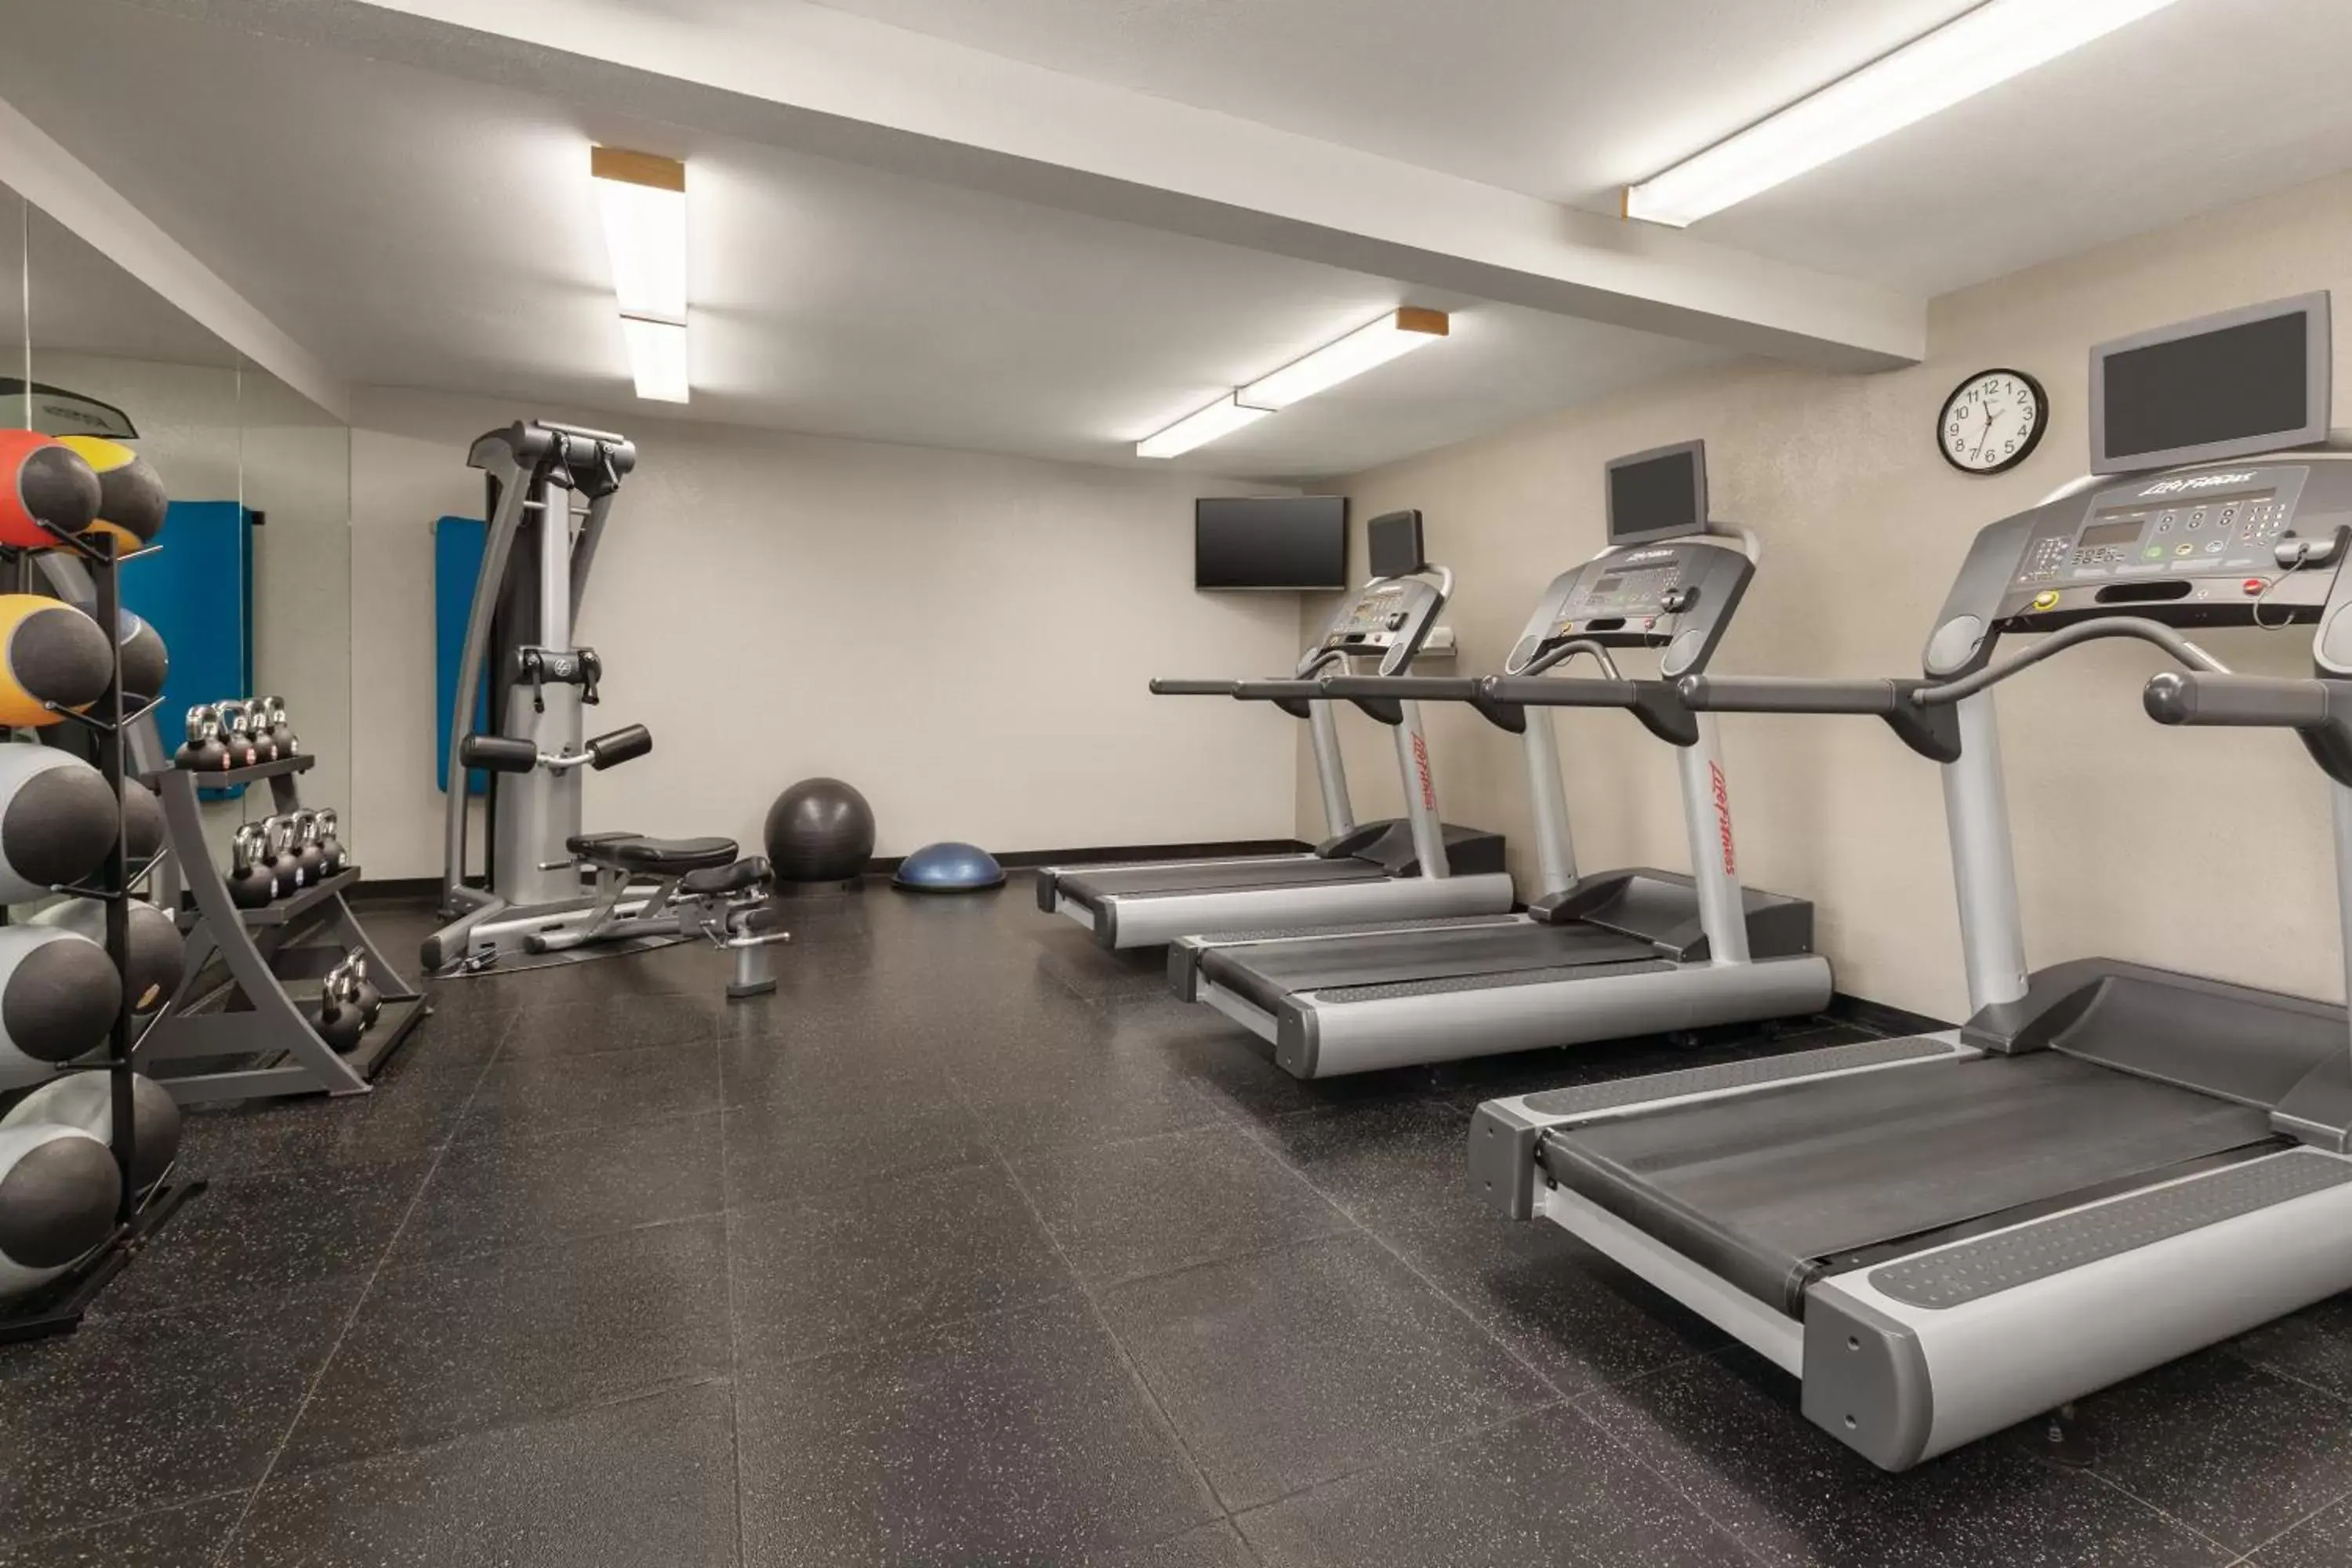 Fitness centre/facilities, Fitness Center/Facilities in Radisson Hotel Sunnyvale - Silicon Valley